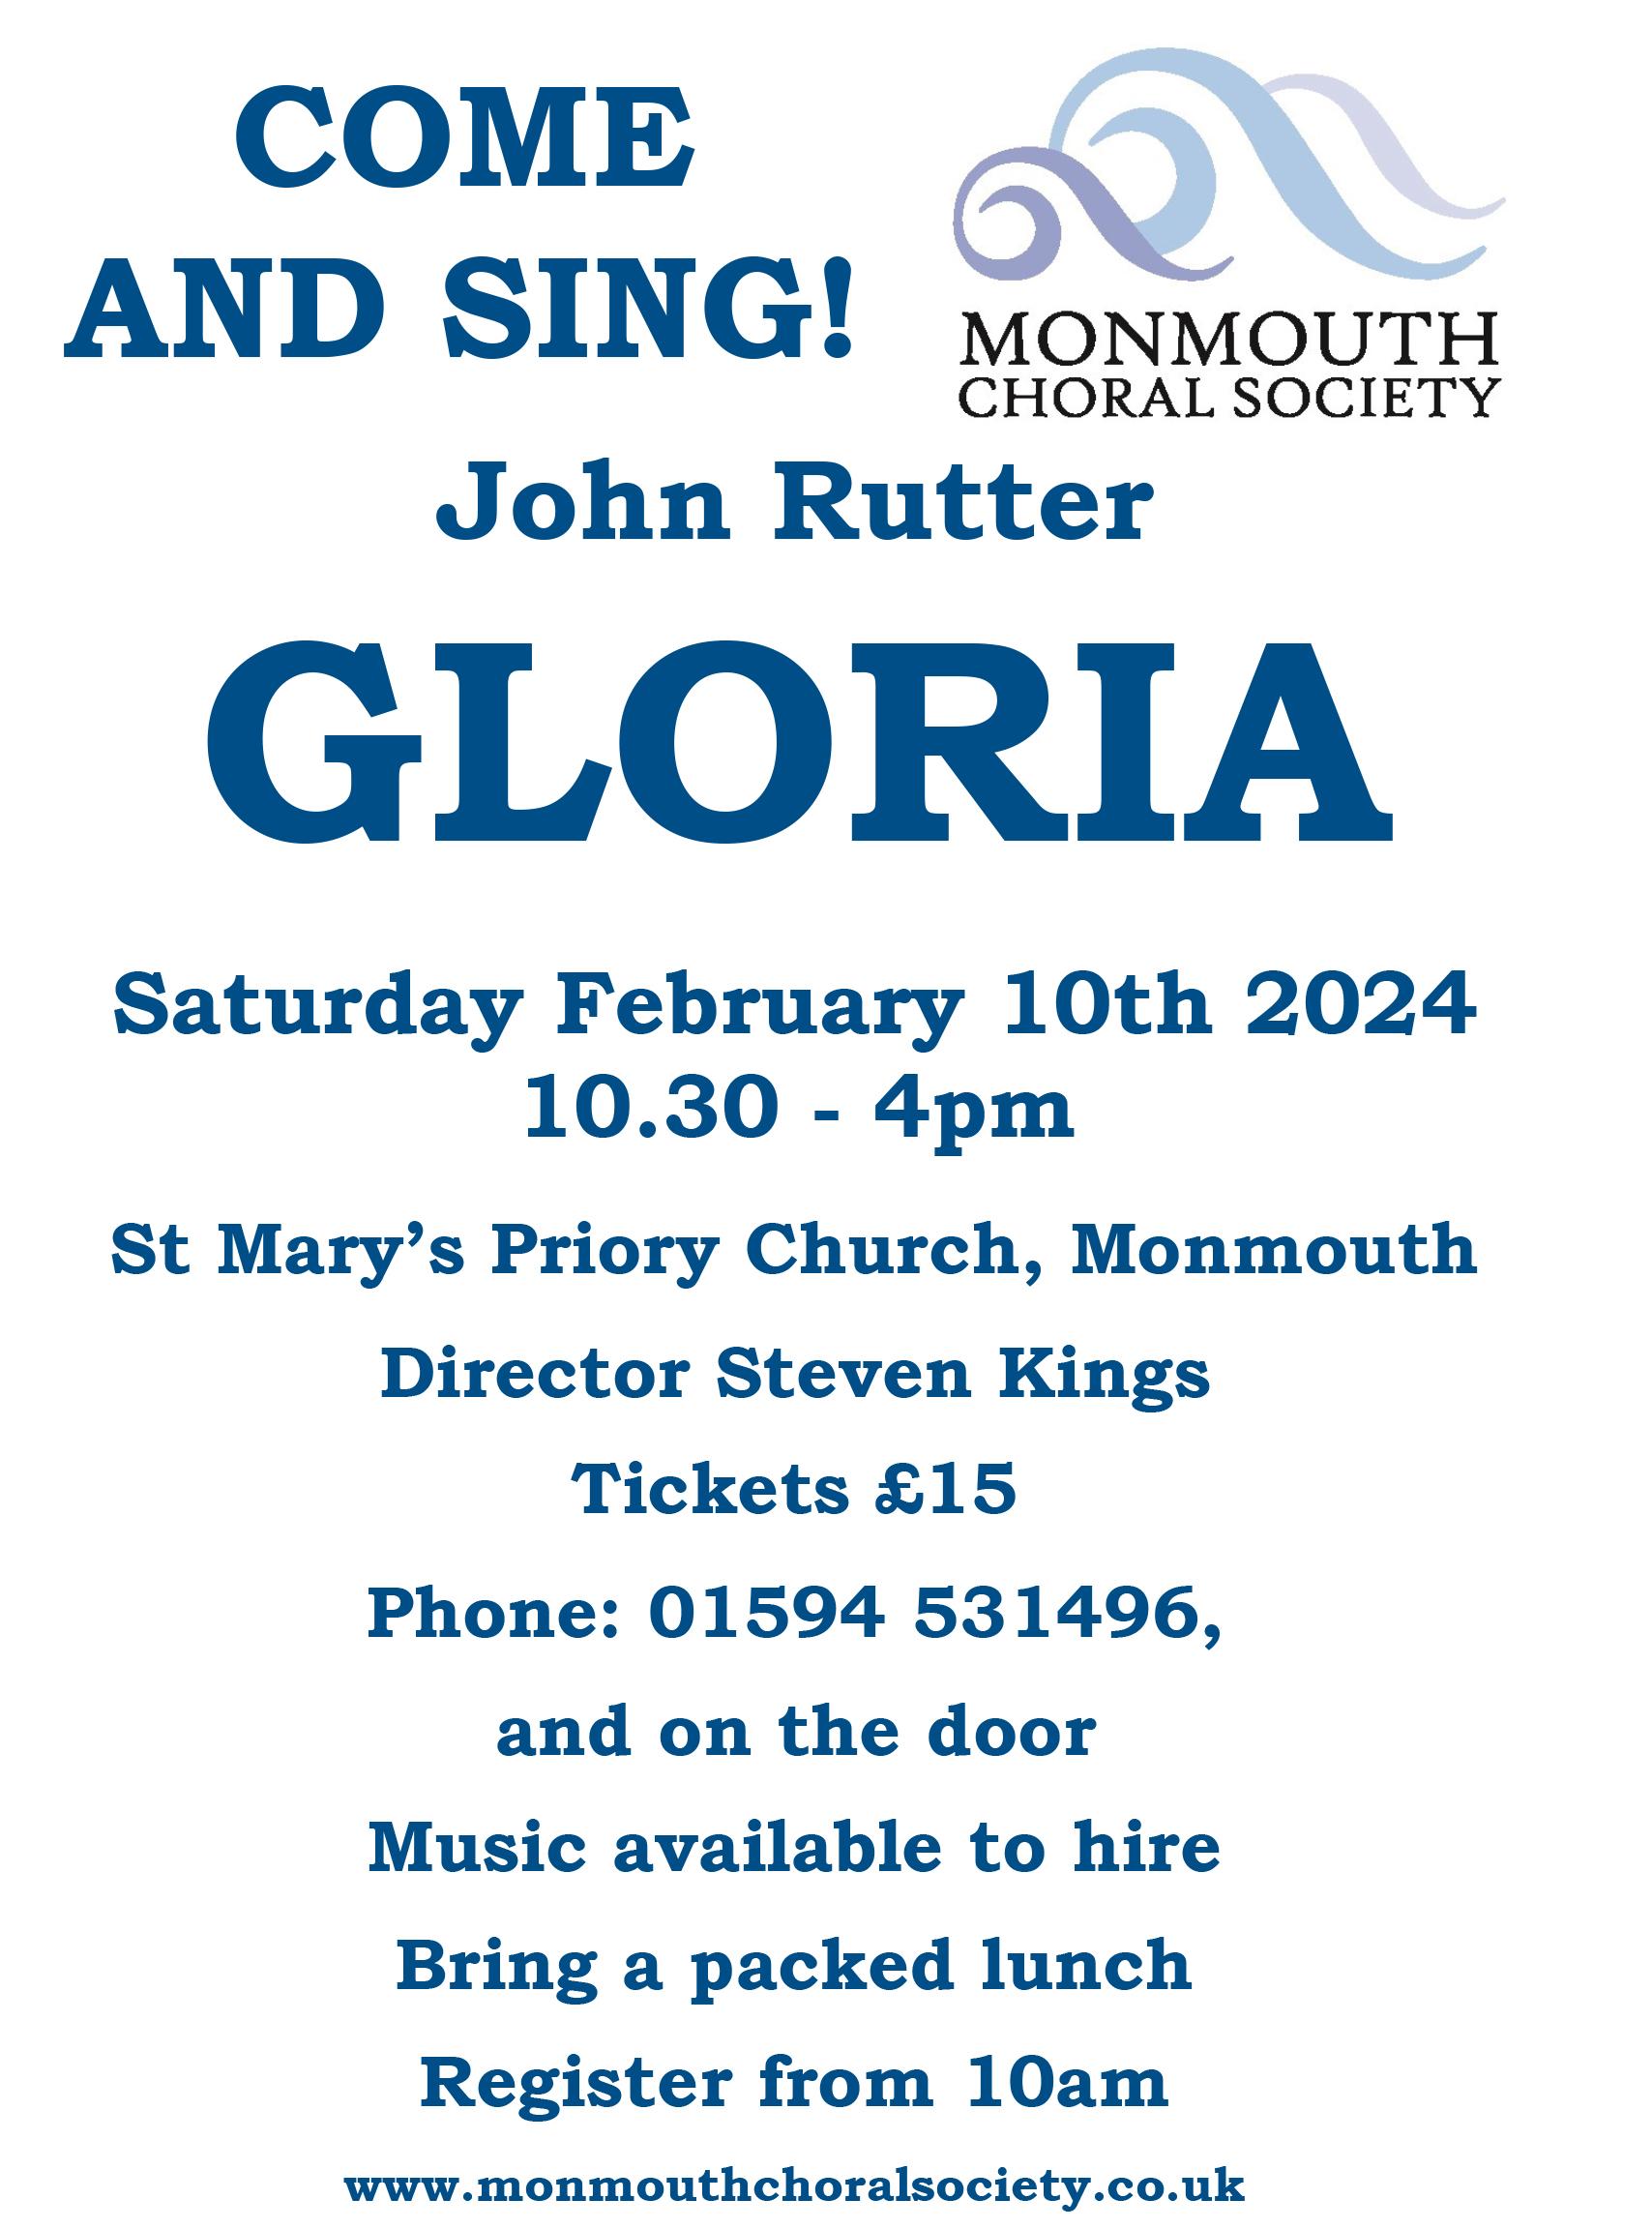 Come and Sing: John Rutter - "Gloria"